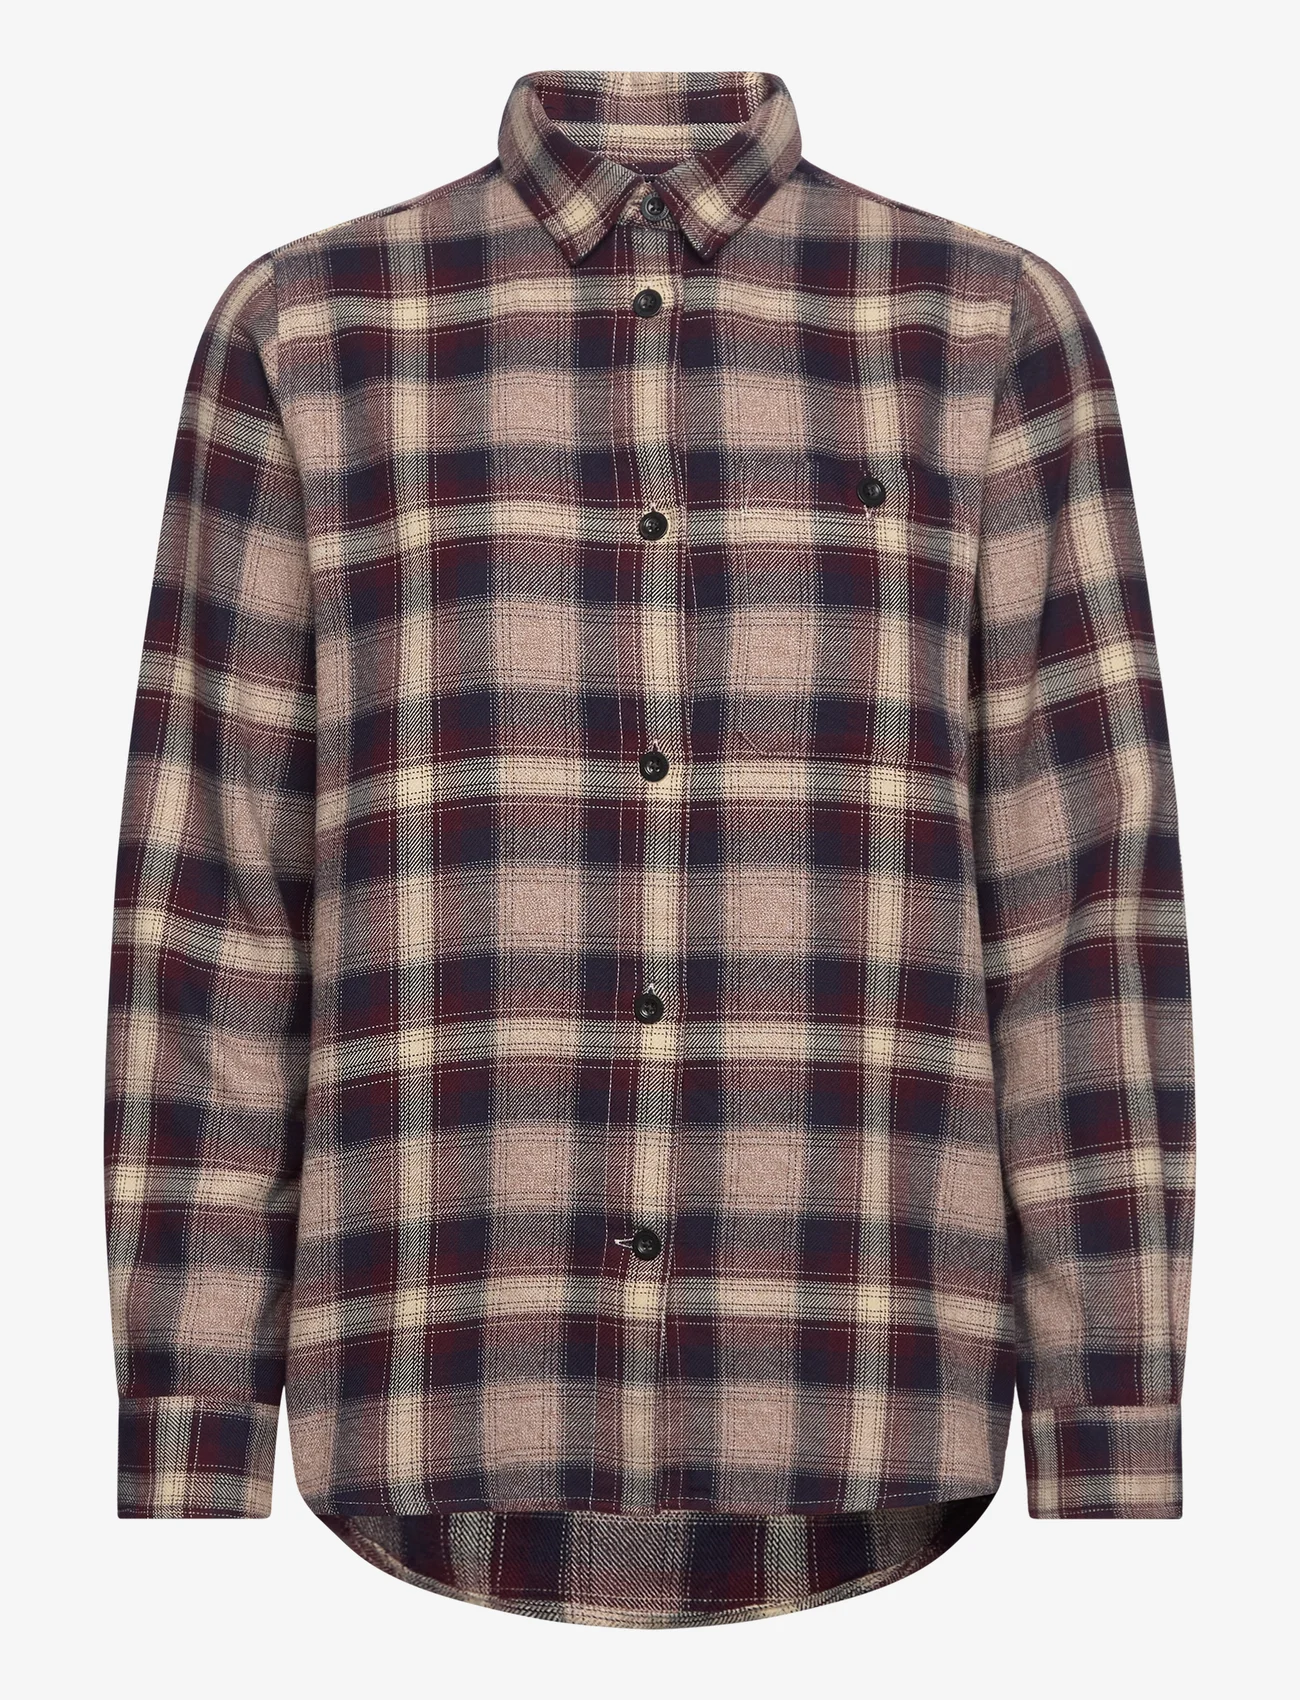 Peak Performance - W Cotton Flannel Shirt-141 CHECK - marškiniai ilgomis rankovėmis - 141 check - 0